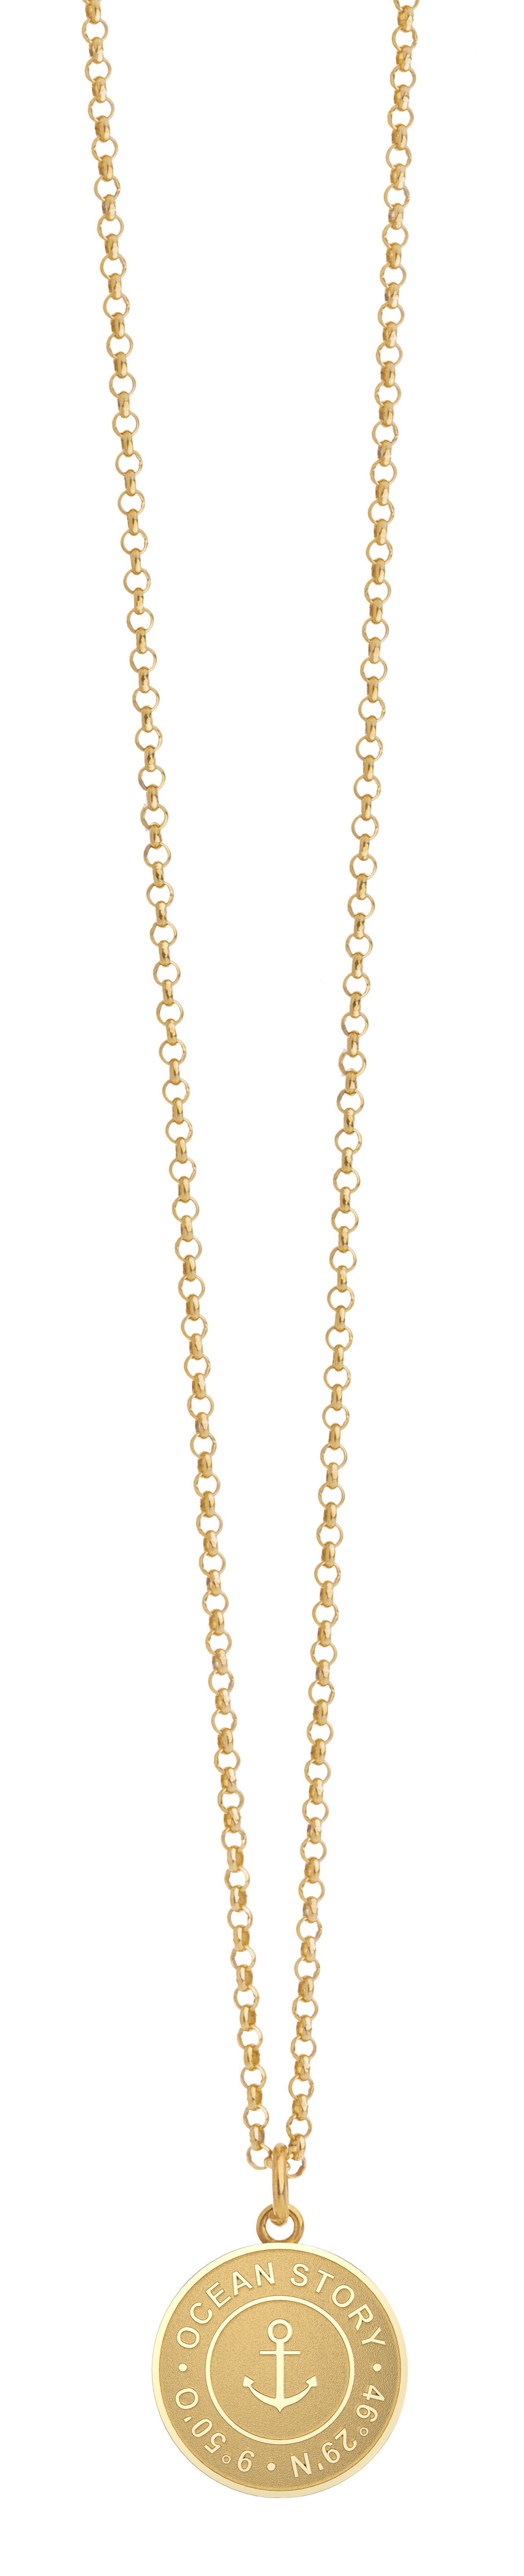 Gold Coin Necklace `St. Moritz